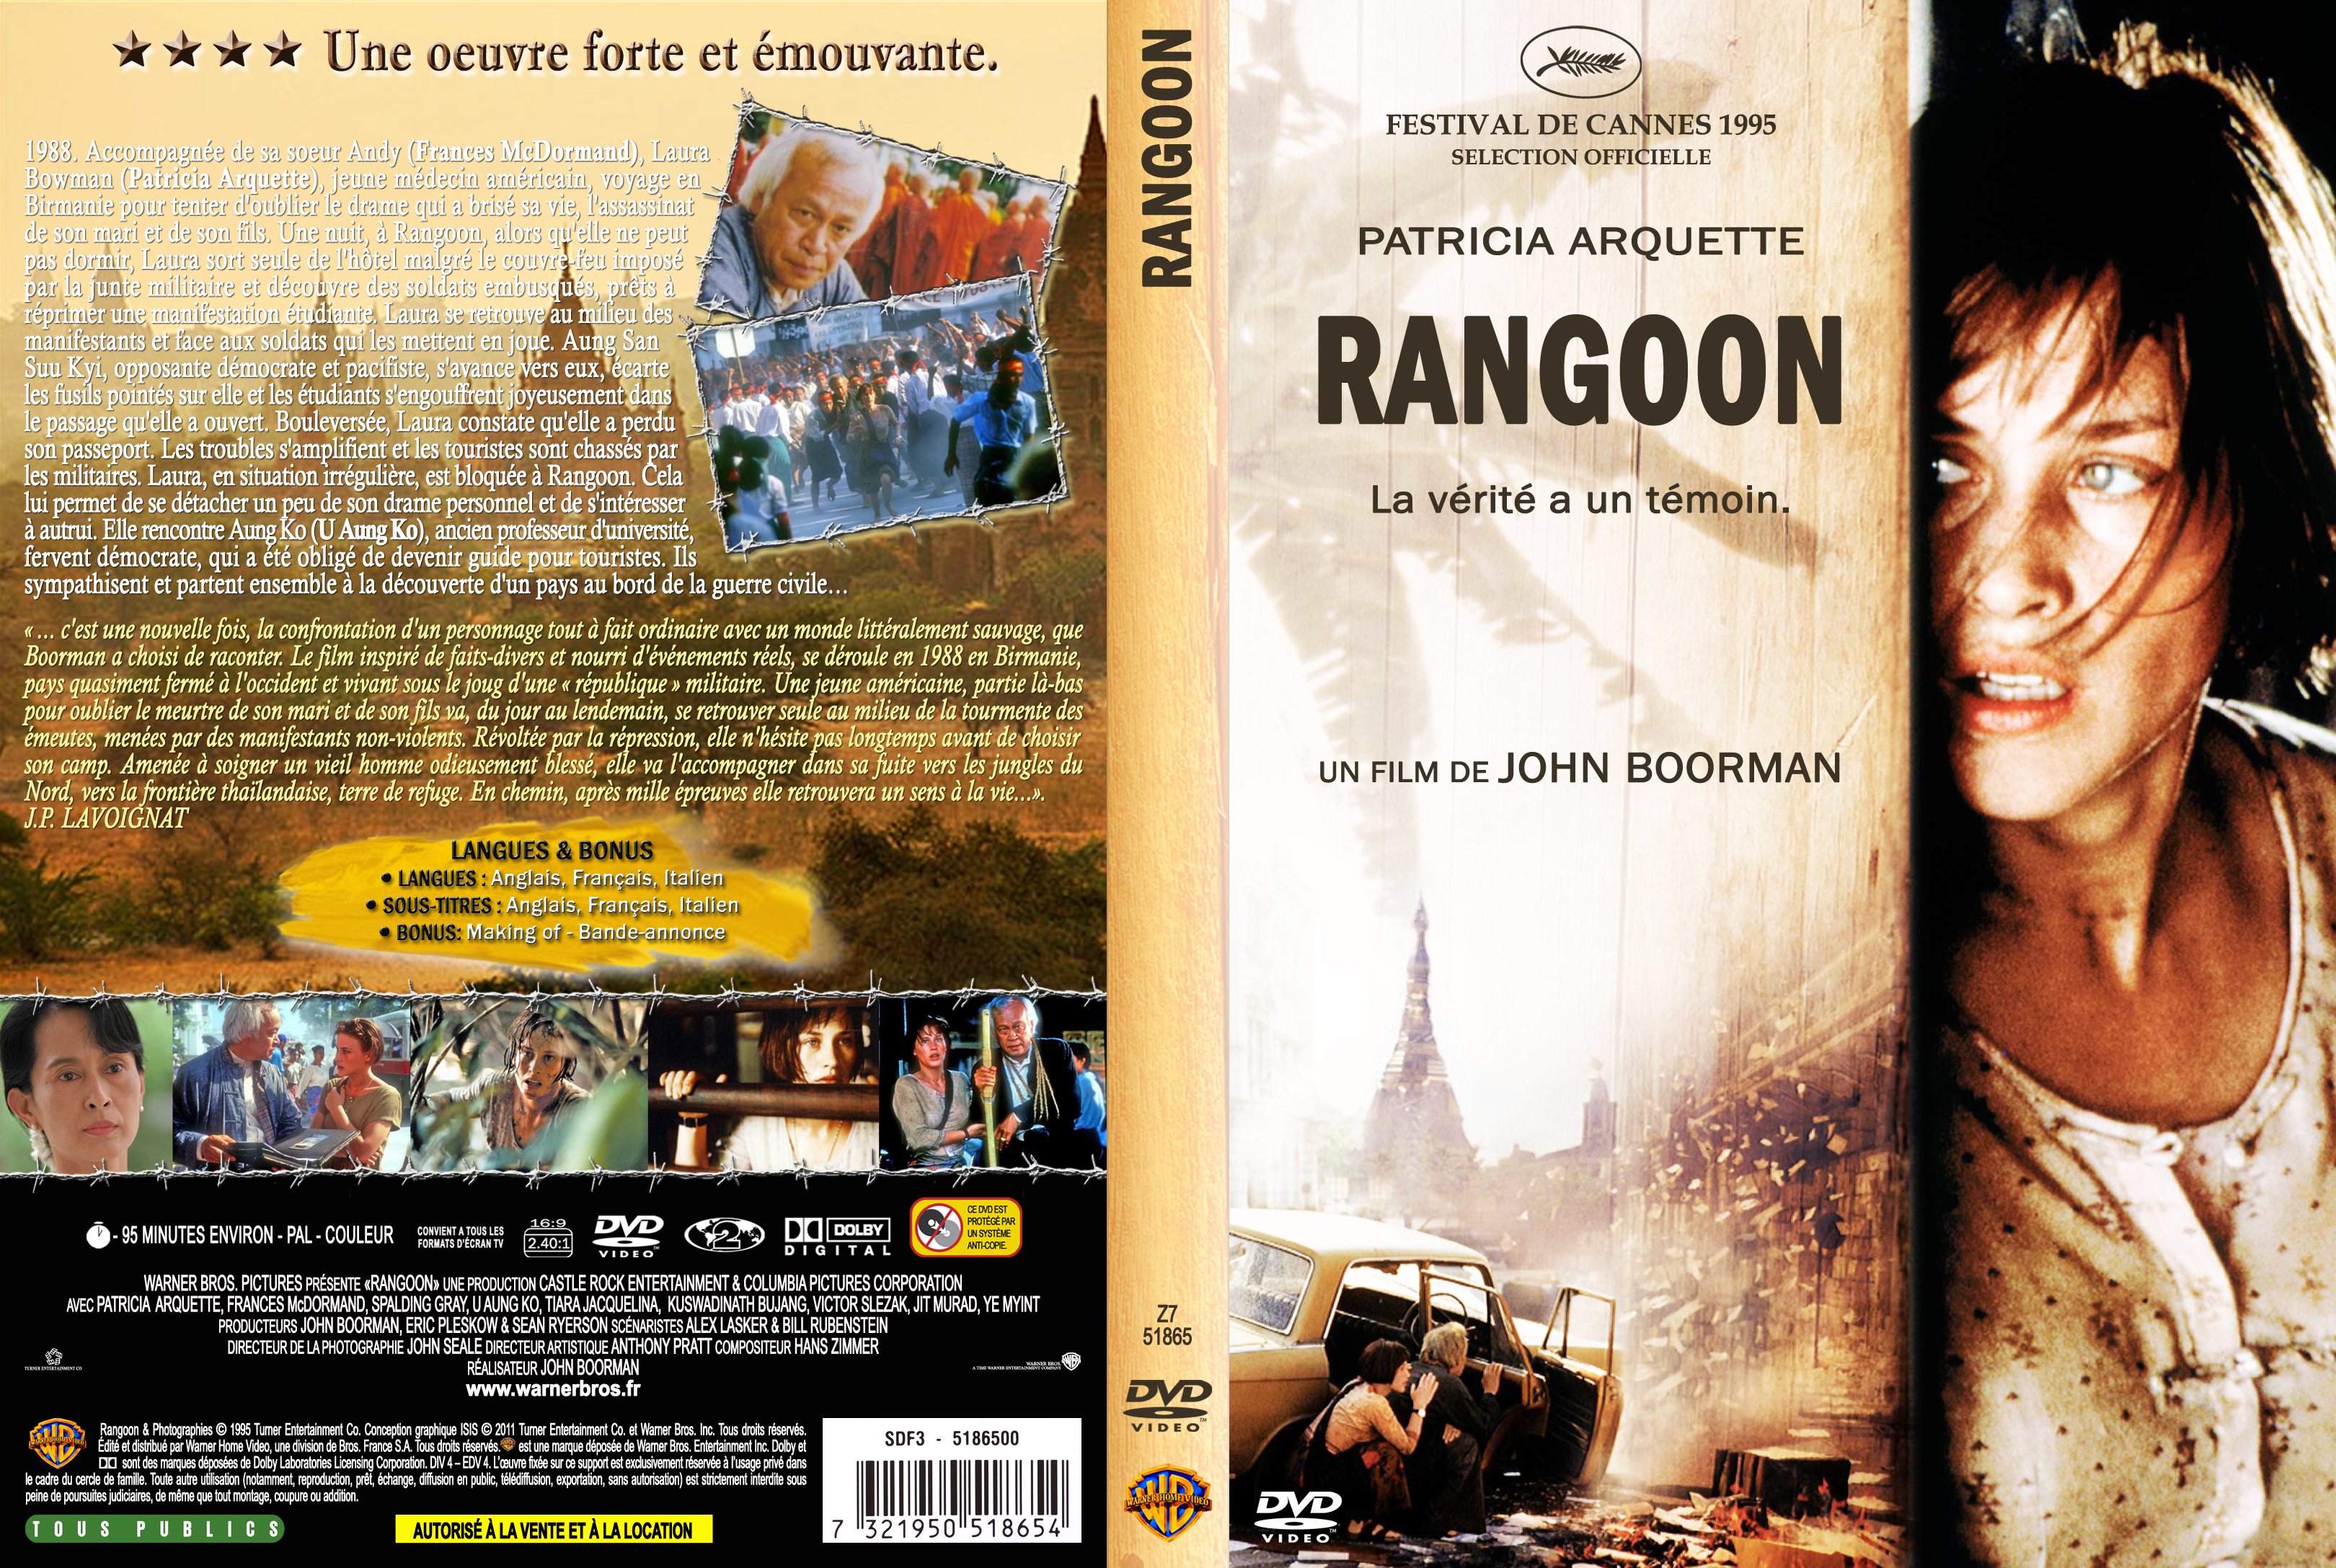 Jaquette DVD Rangoon custom